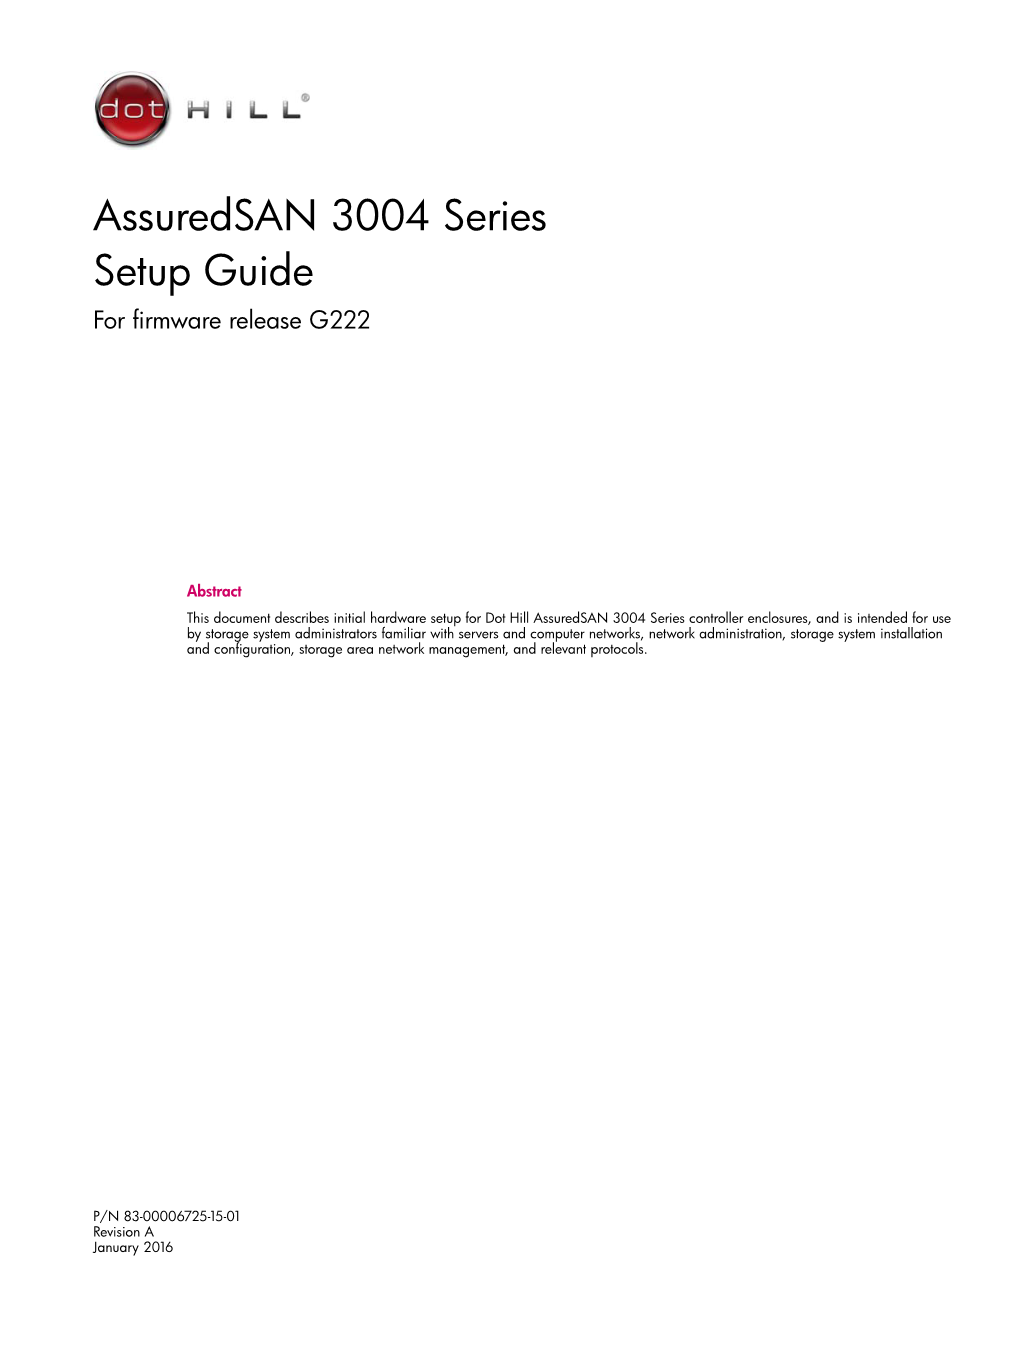 Assuredsan 3004 Series Setup Guide for Firmware Release G222